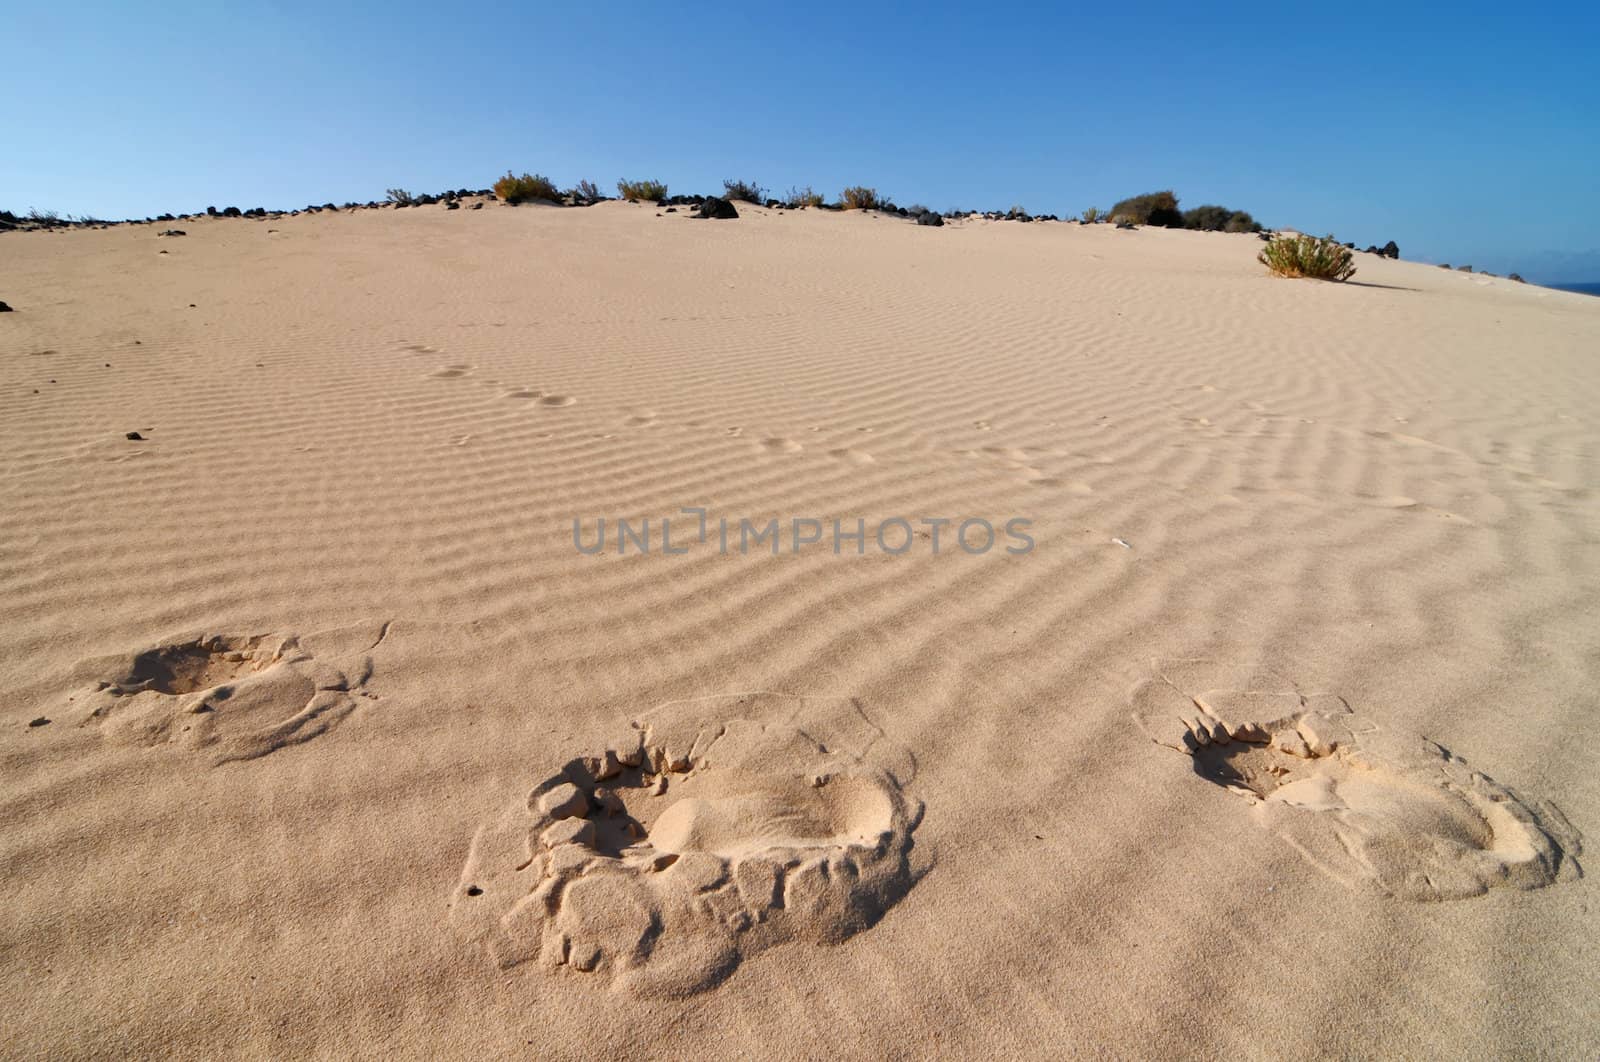 Footsteps in the desert by underworld